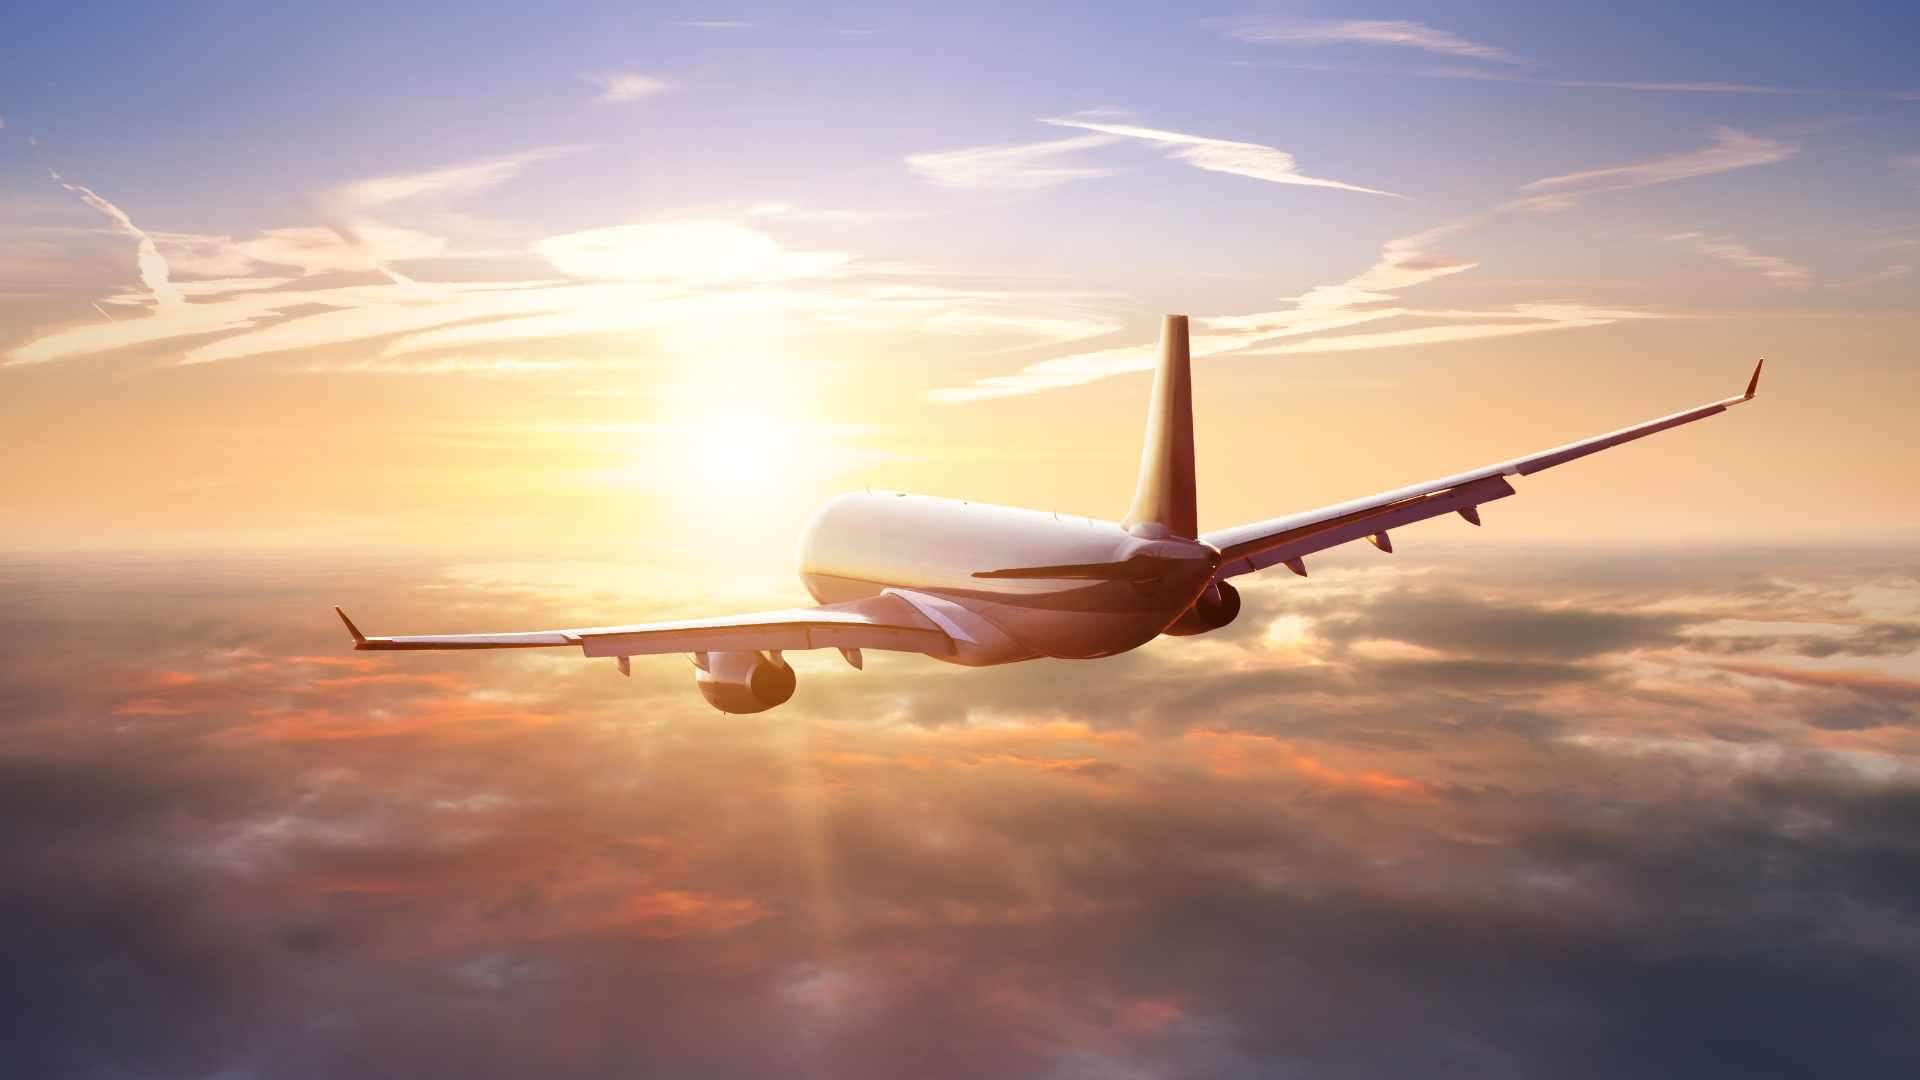 Understanding Continuing Airworthiness Management